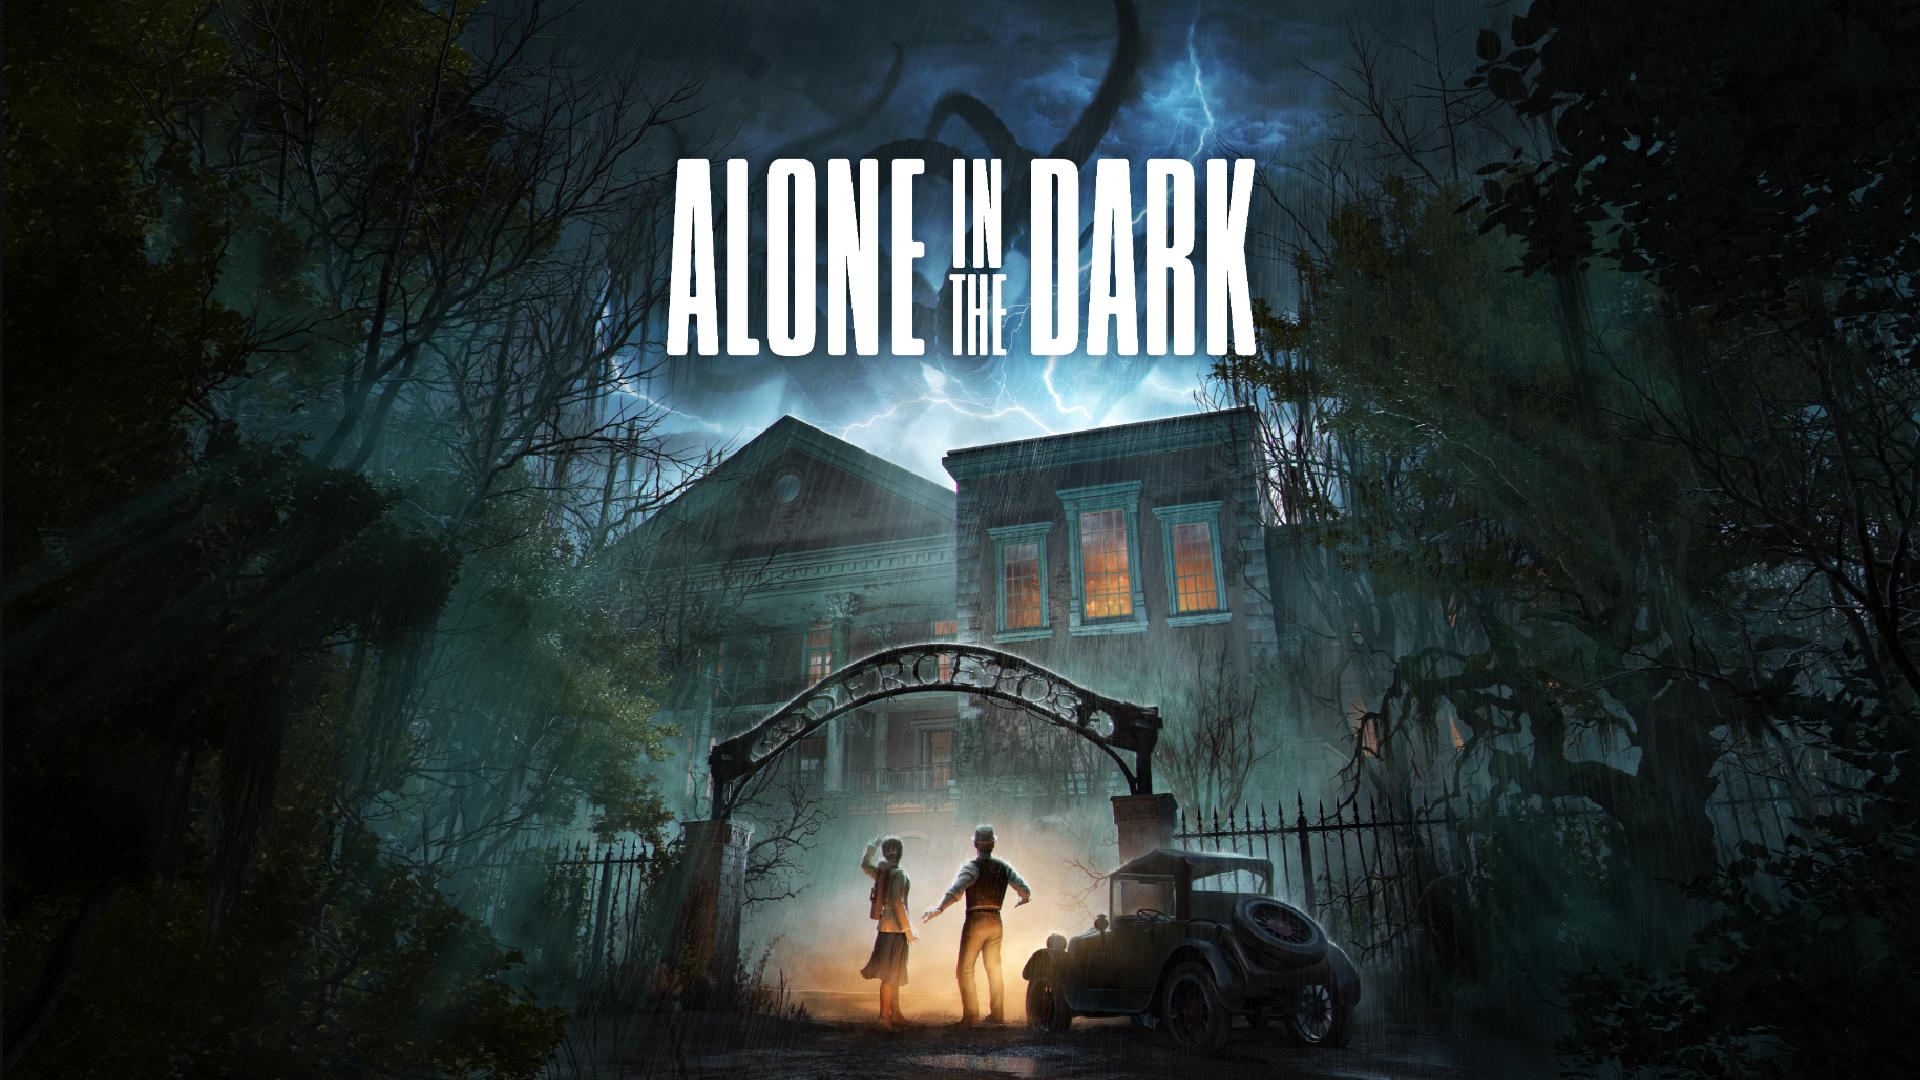 Review: “Alone In The Dark” (Retro Computer Game)